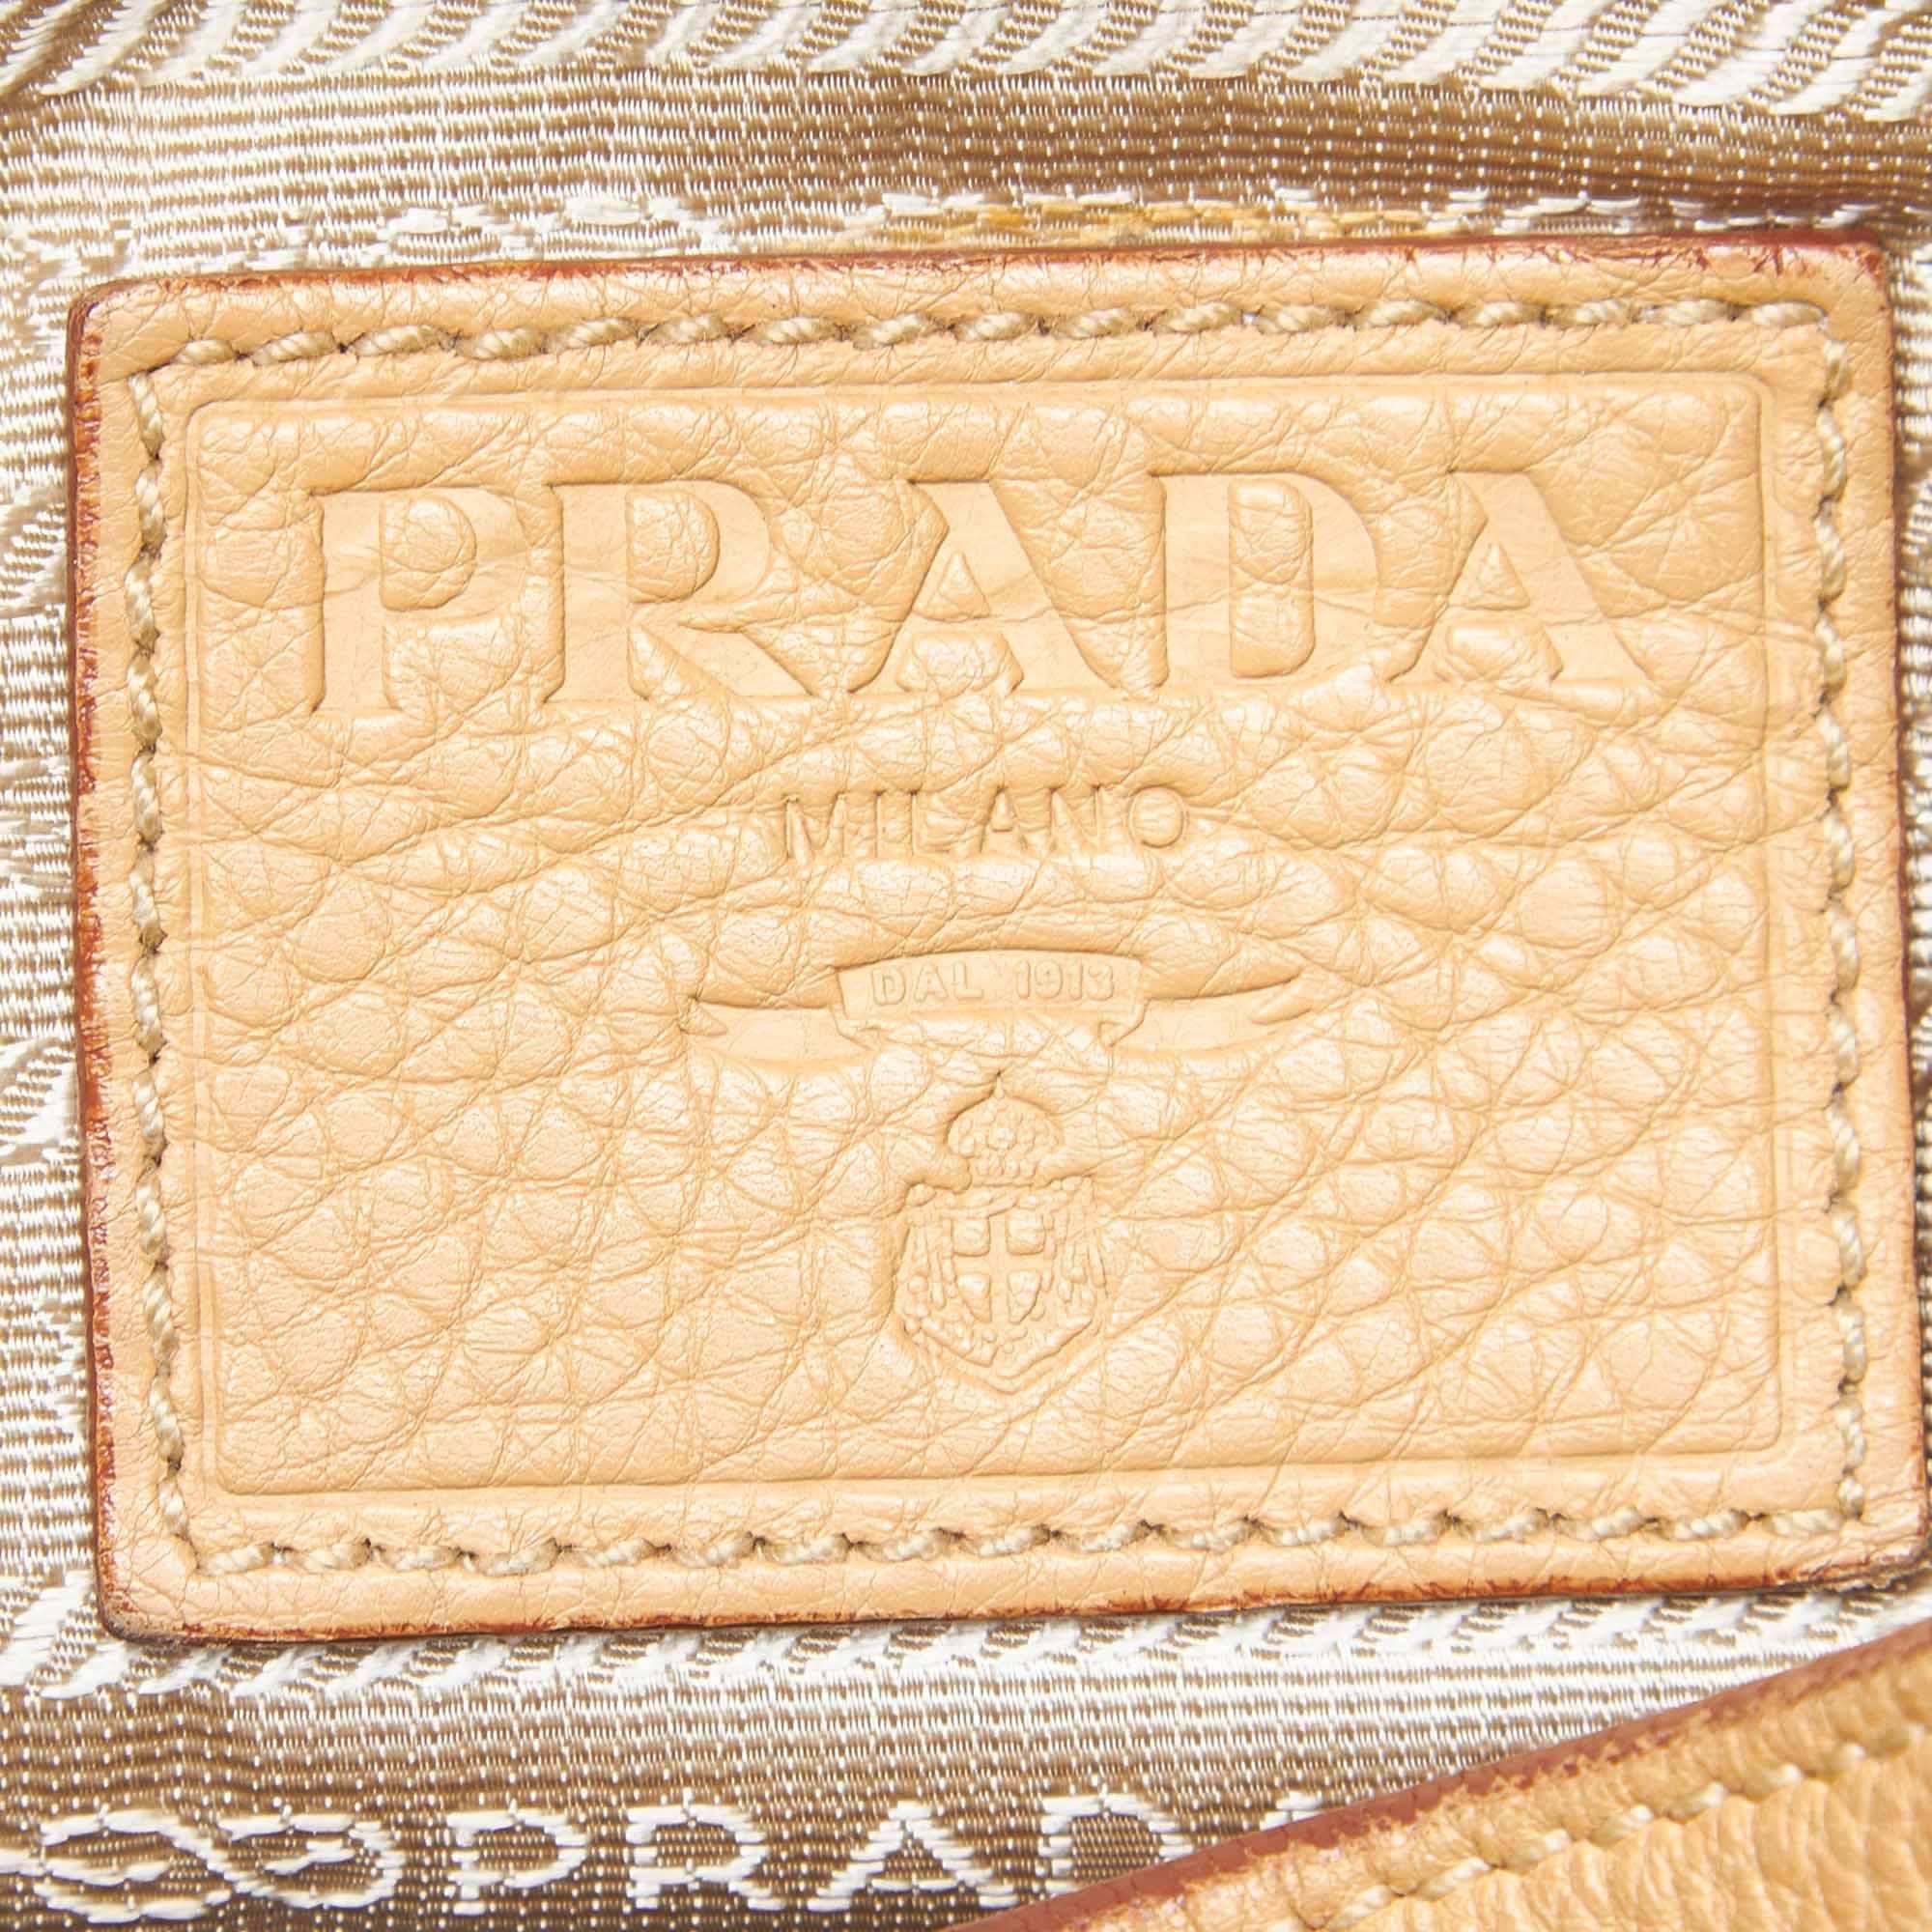 Vintage Authentic Prada Brown Beige Leather Vitello Daino Hobo Bag Italy LARGE  For Sale 2